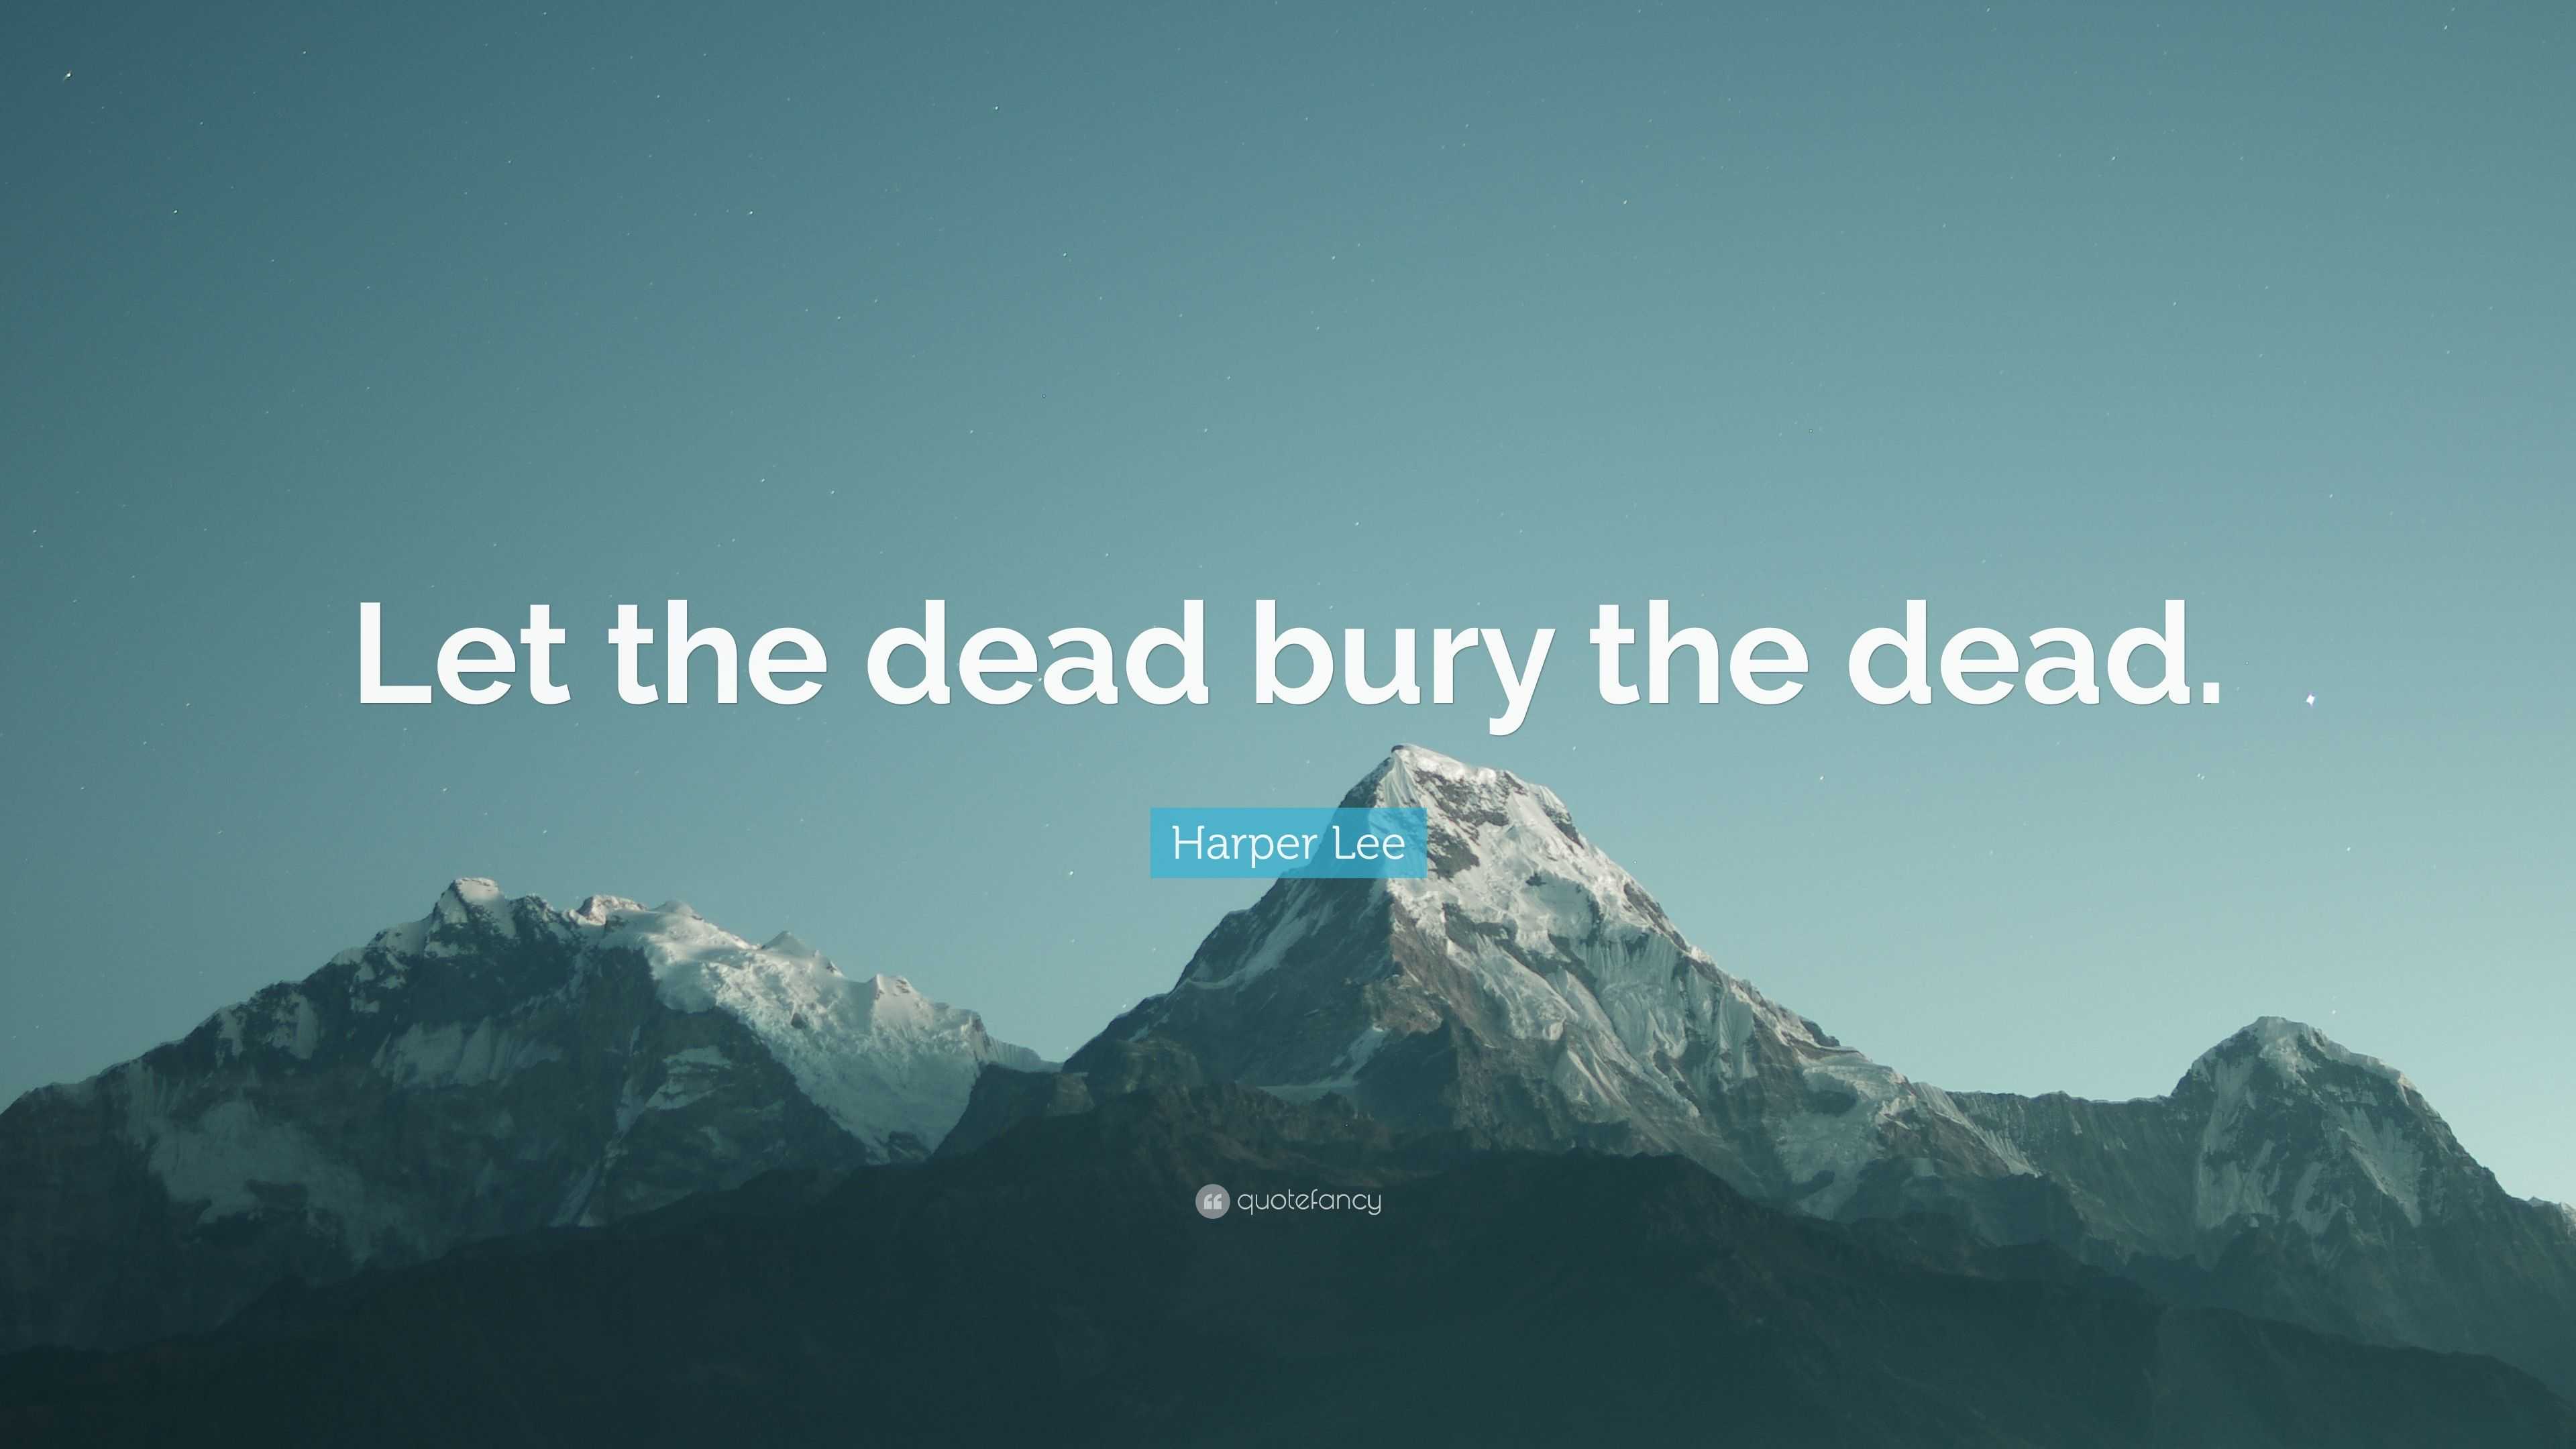 Harper Lee Quote “let The Dead Bury The Dead”